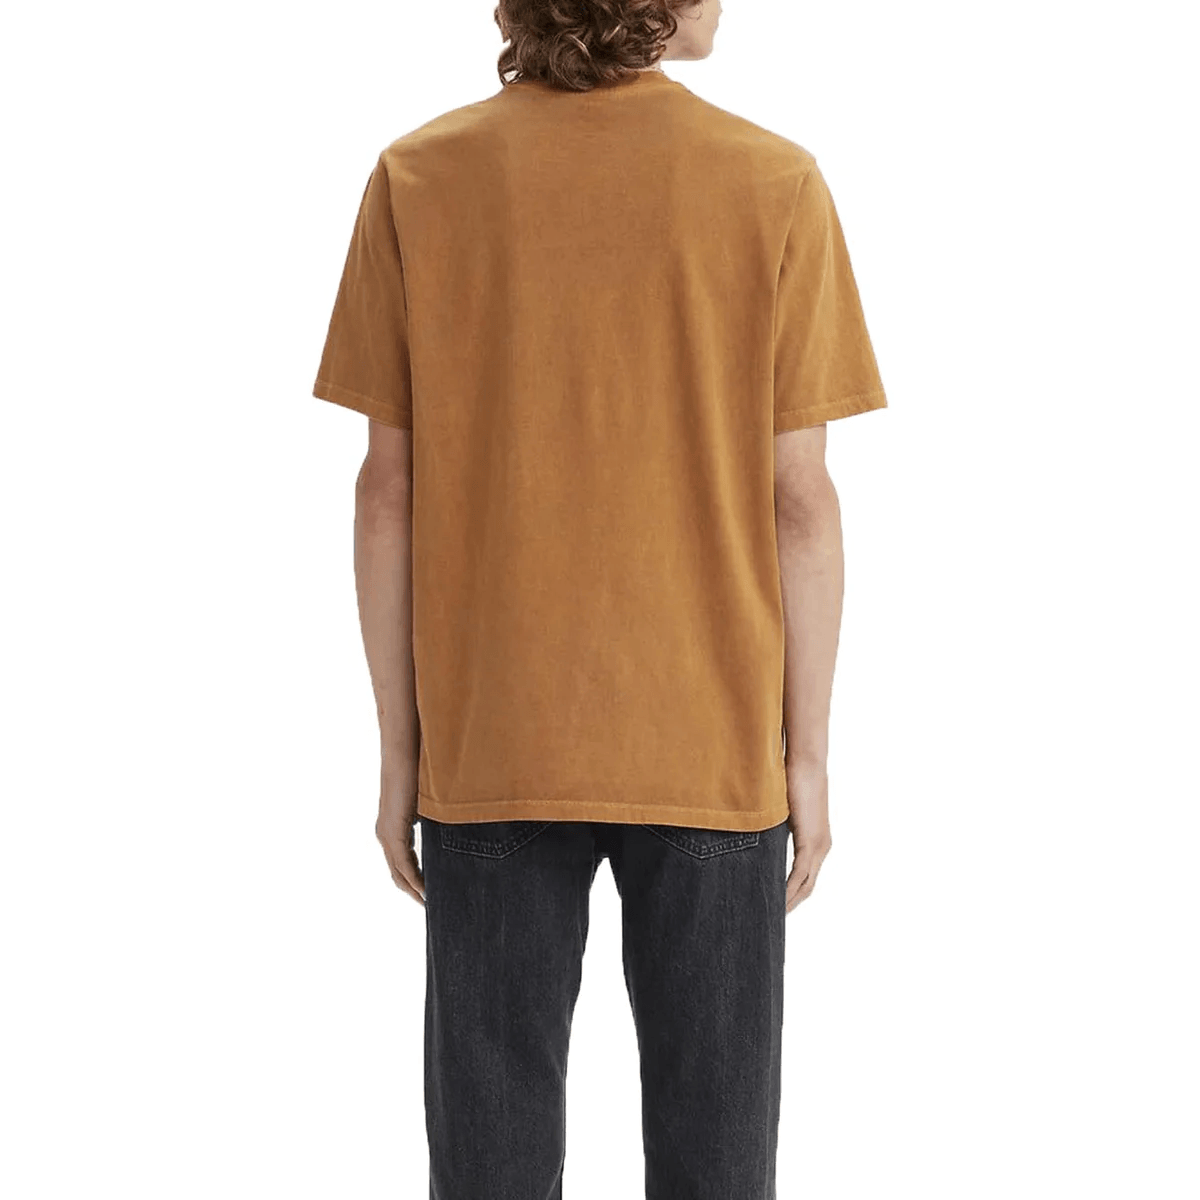 Levi's Uomo T-shirt Pocket Tabacco A3697-0007